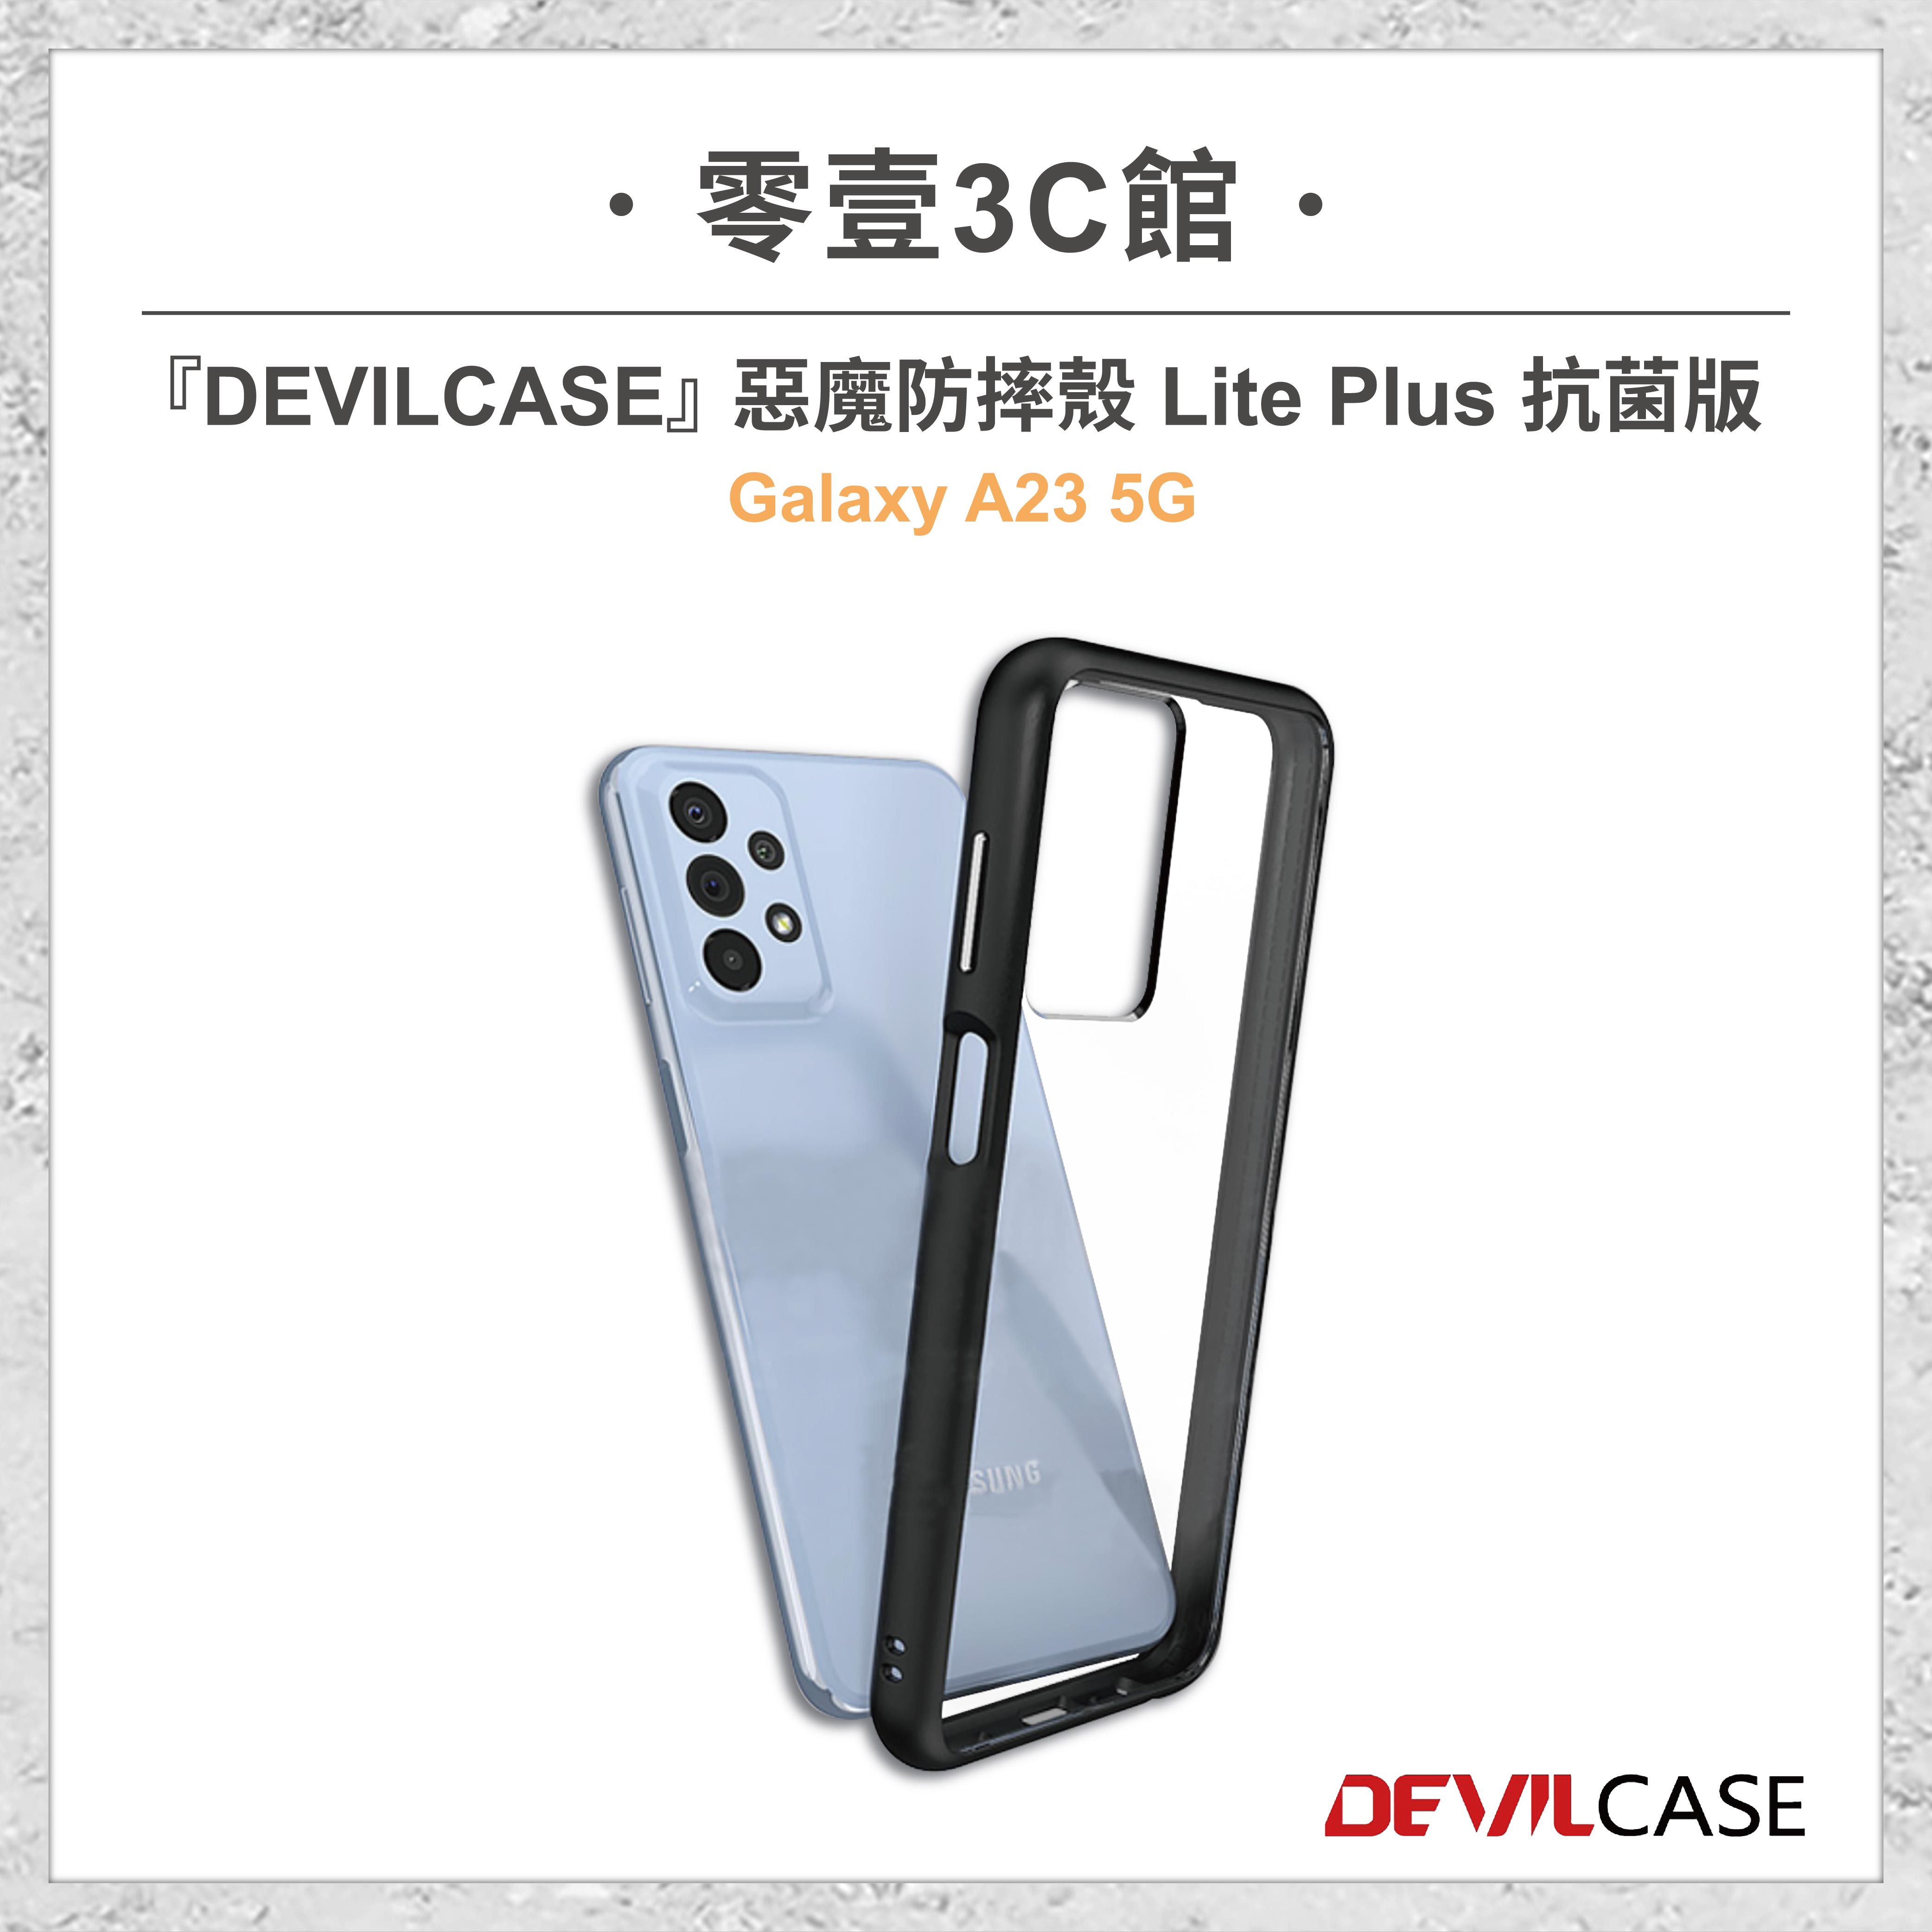 【DEVILCASE】Samsung Galaxy A23 5G 惡魔防摔殼 Lite Plus 抗菌版 全新防摔殼 防摔殼 手機殼